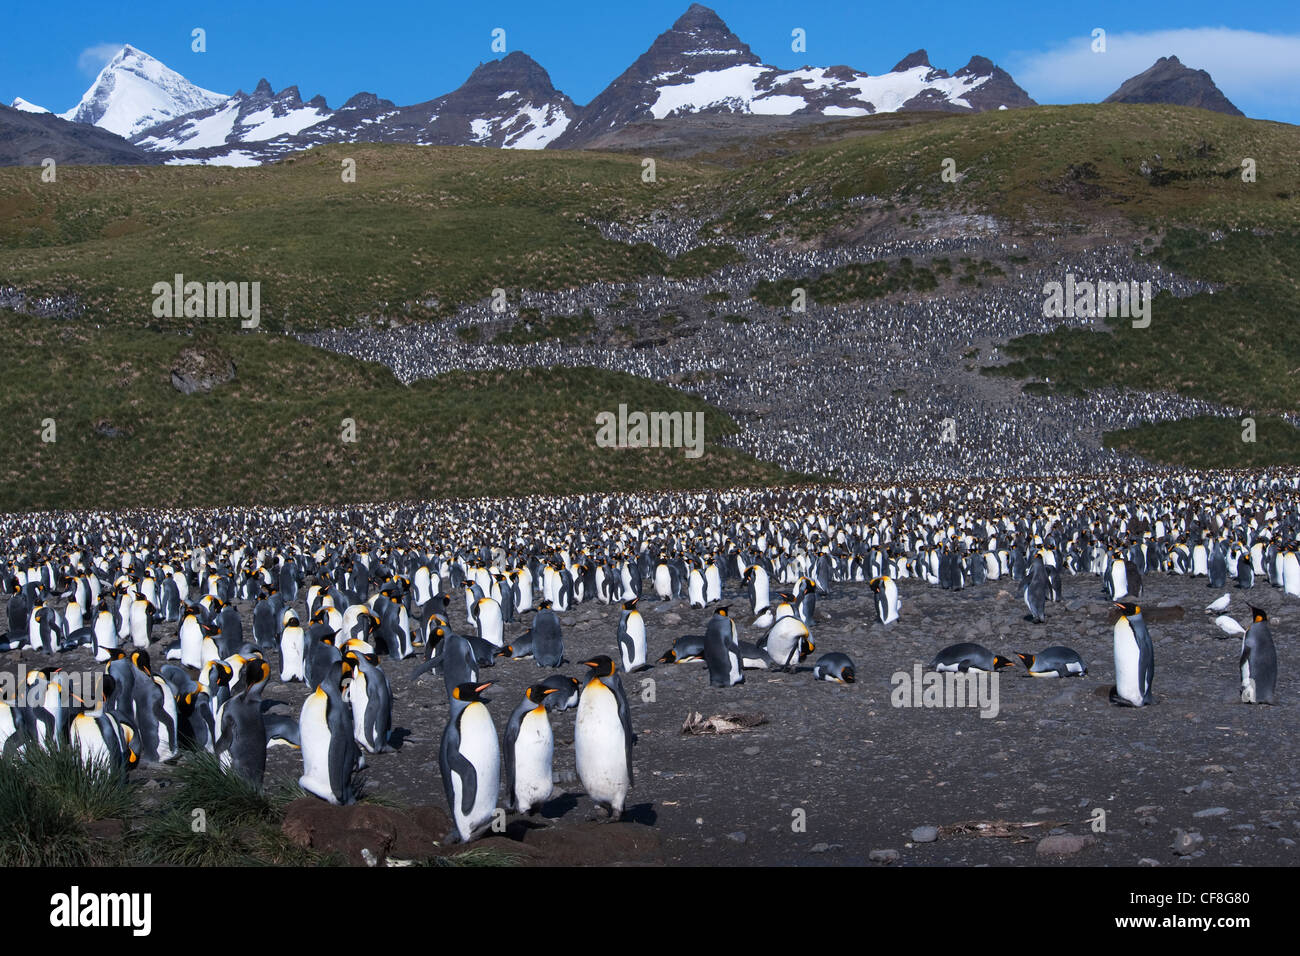 King Penguin (Aptenodytes patagonicus) colony with South Georgia mountains in the background. Salisbury Plain, South Georgia. Stock Photo